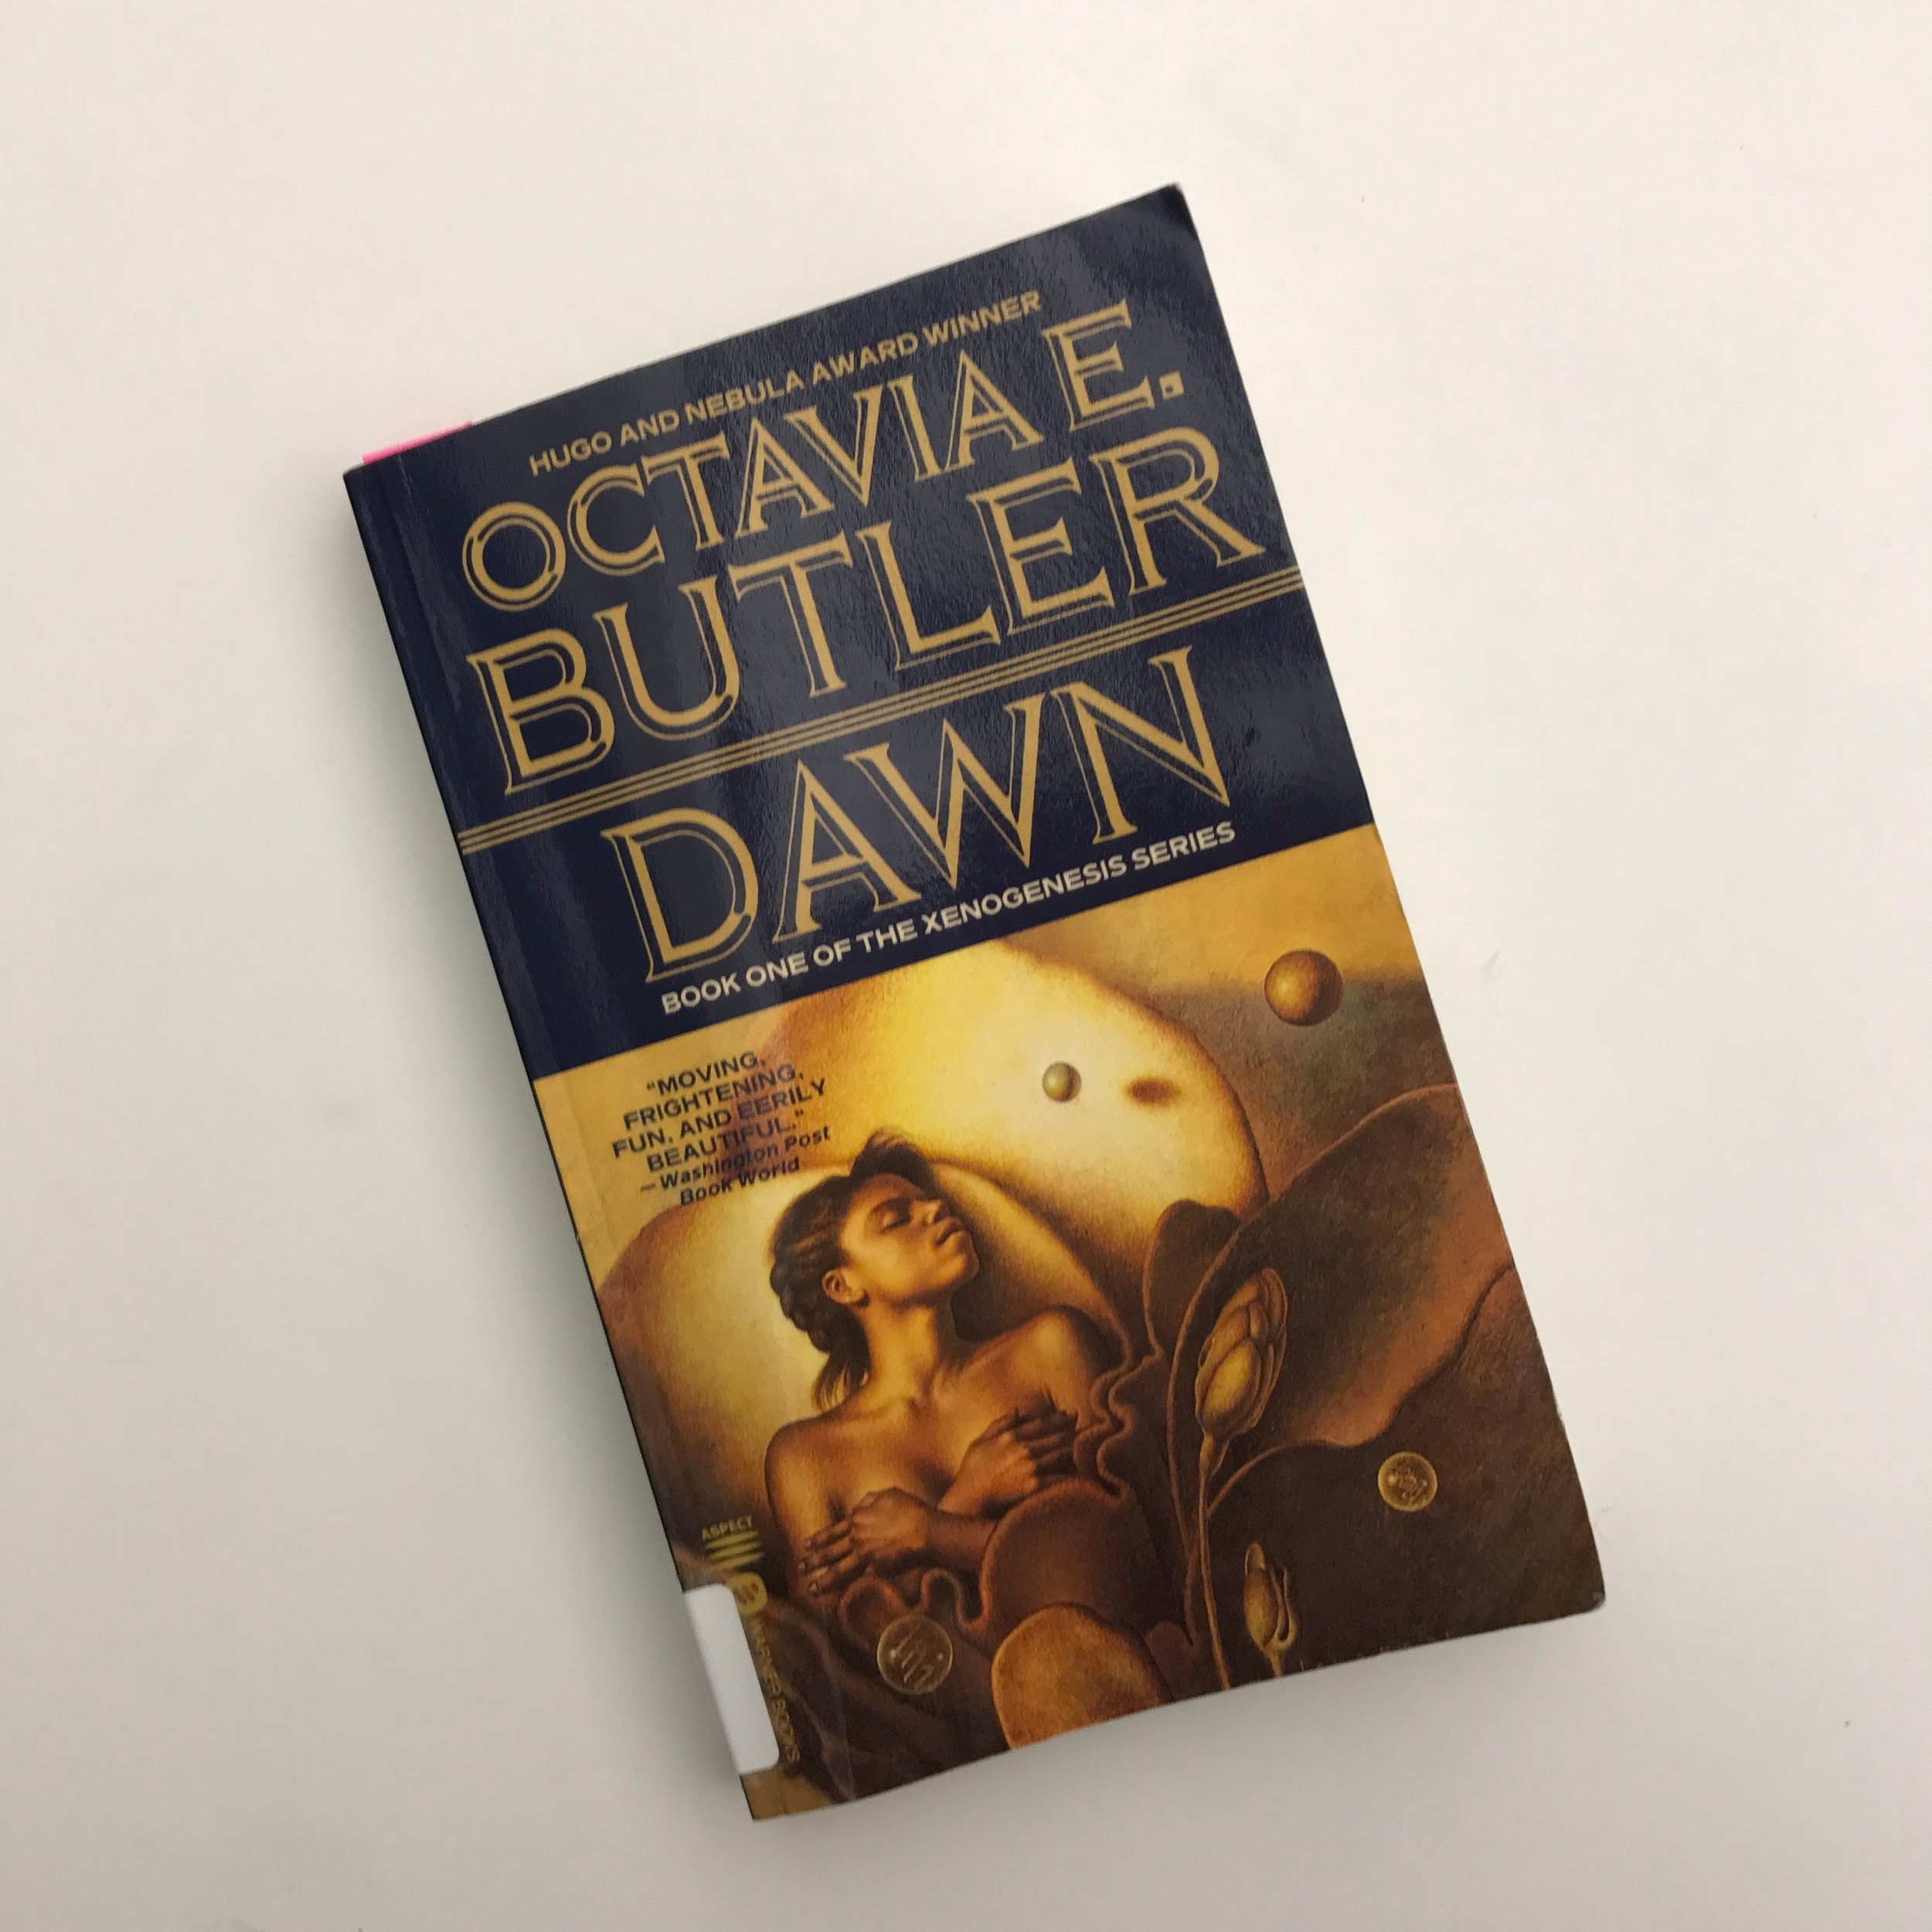  Dawn by Octavia Butler 